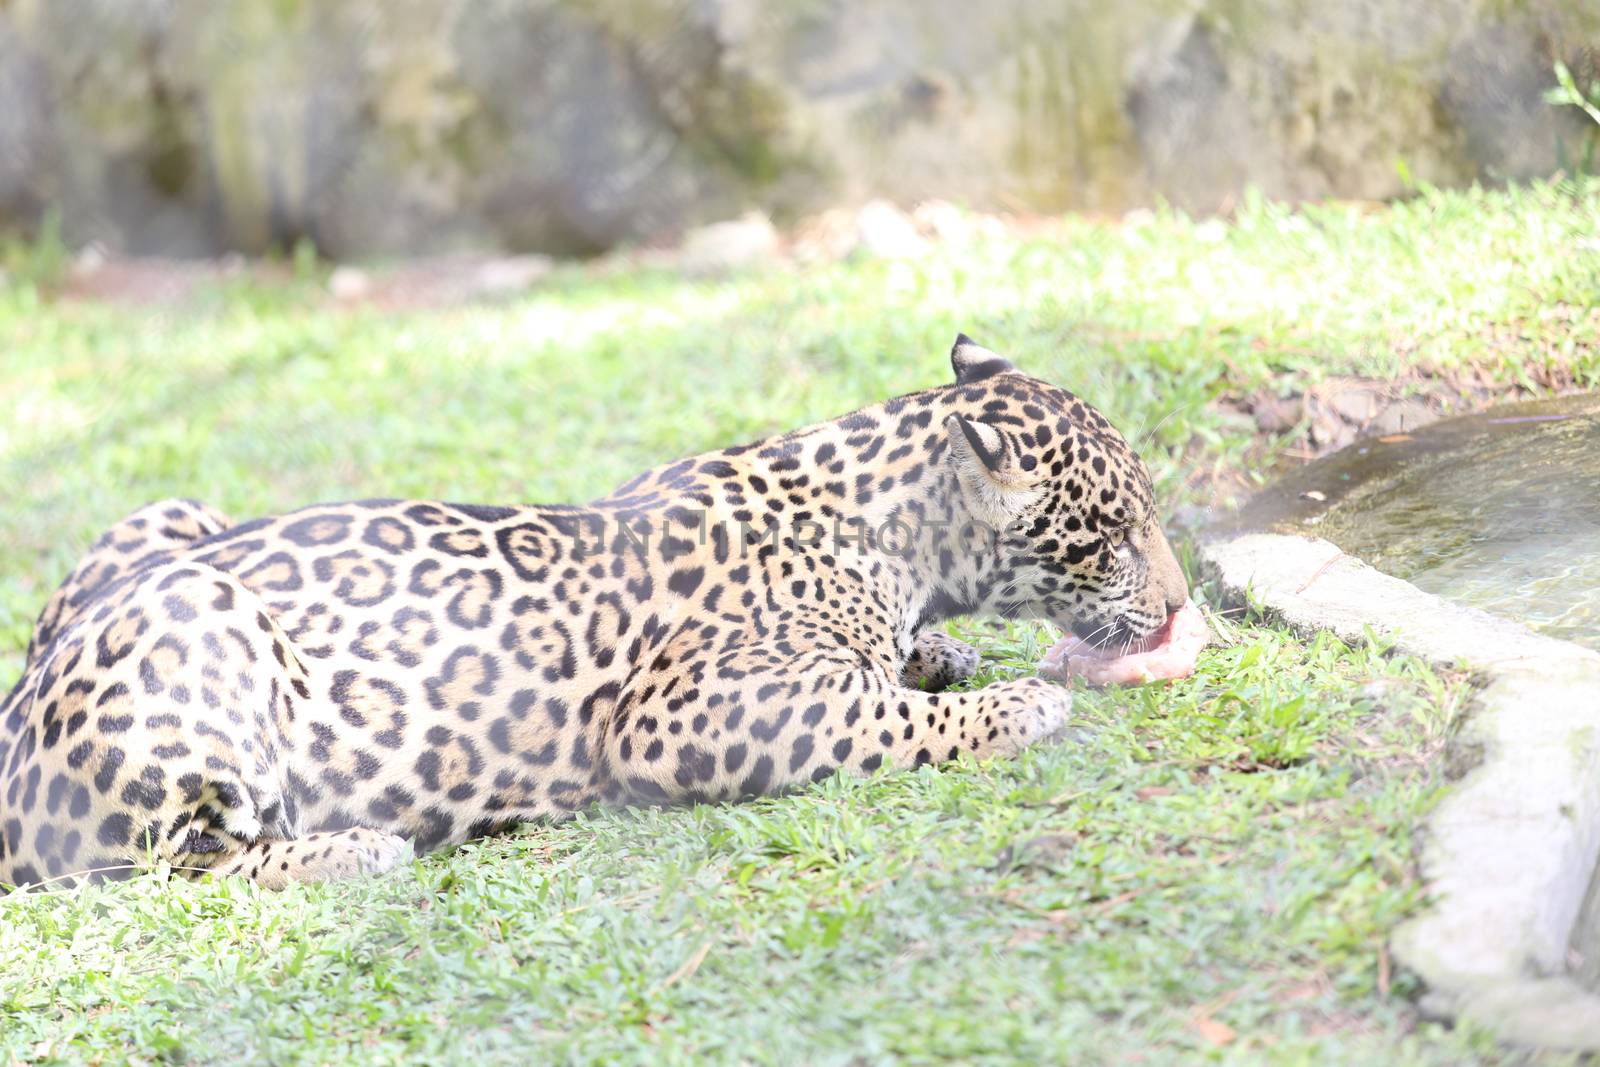 Jaguar eating his pray by dacasdo